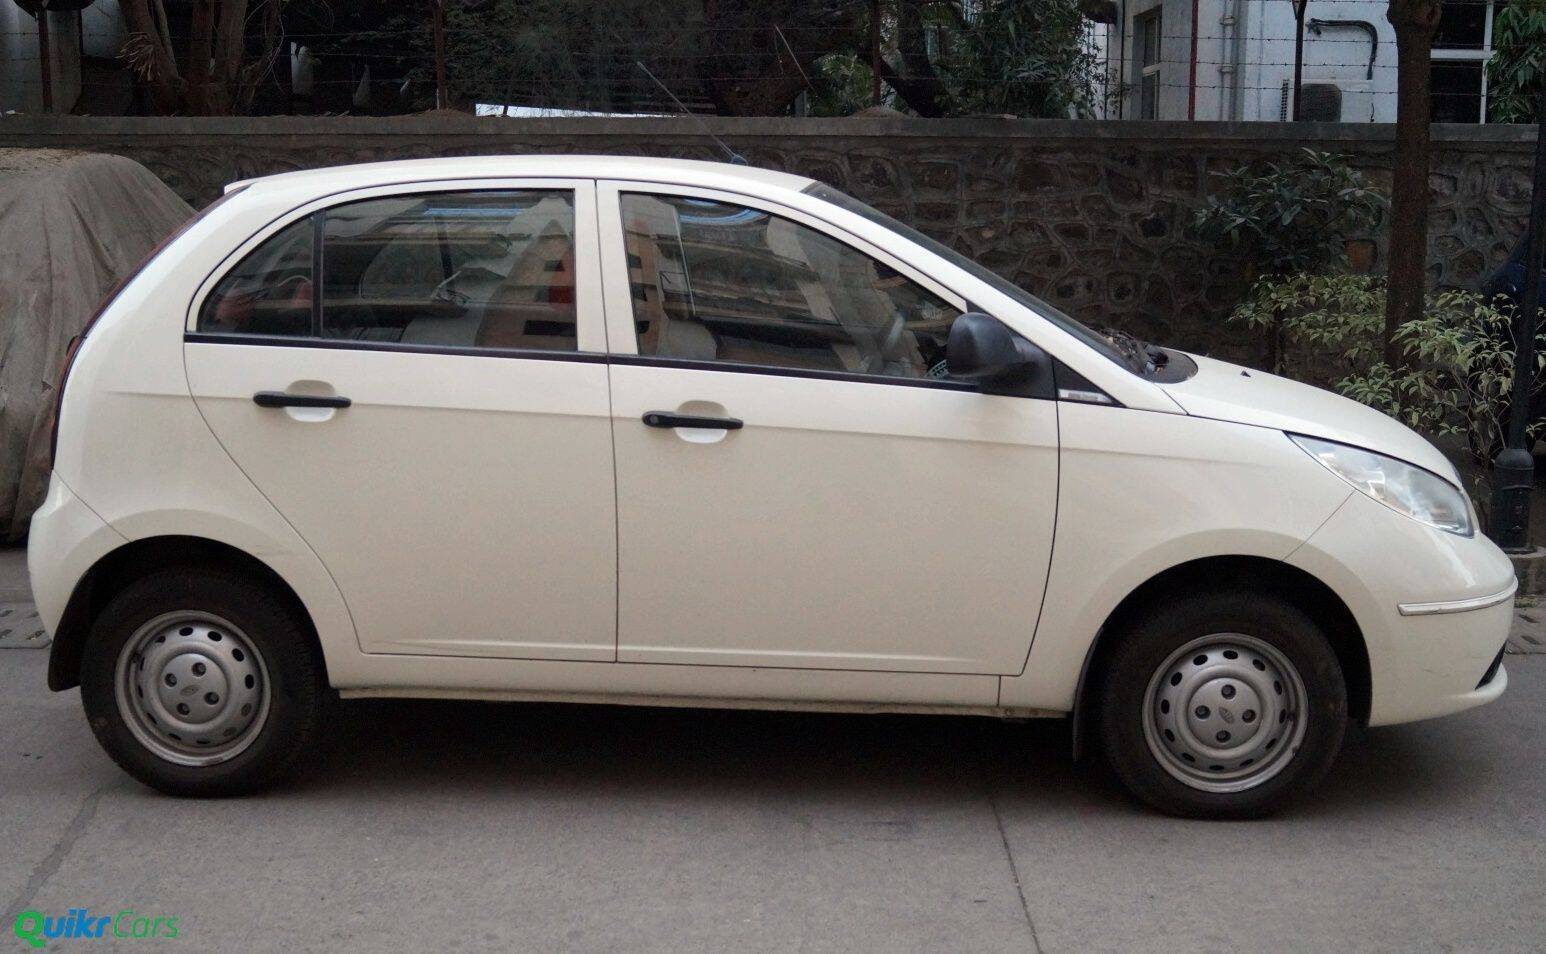 Tata Indica exterior - Side Profile